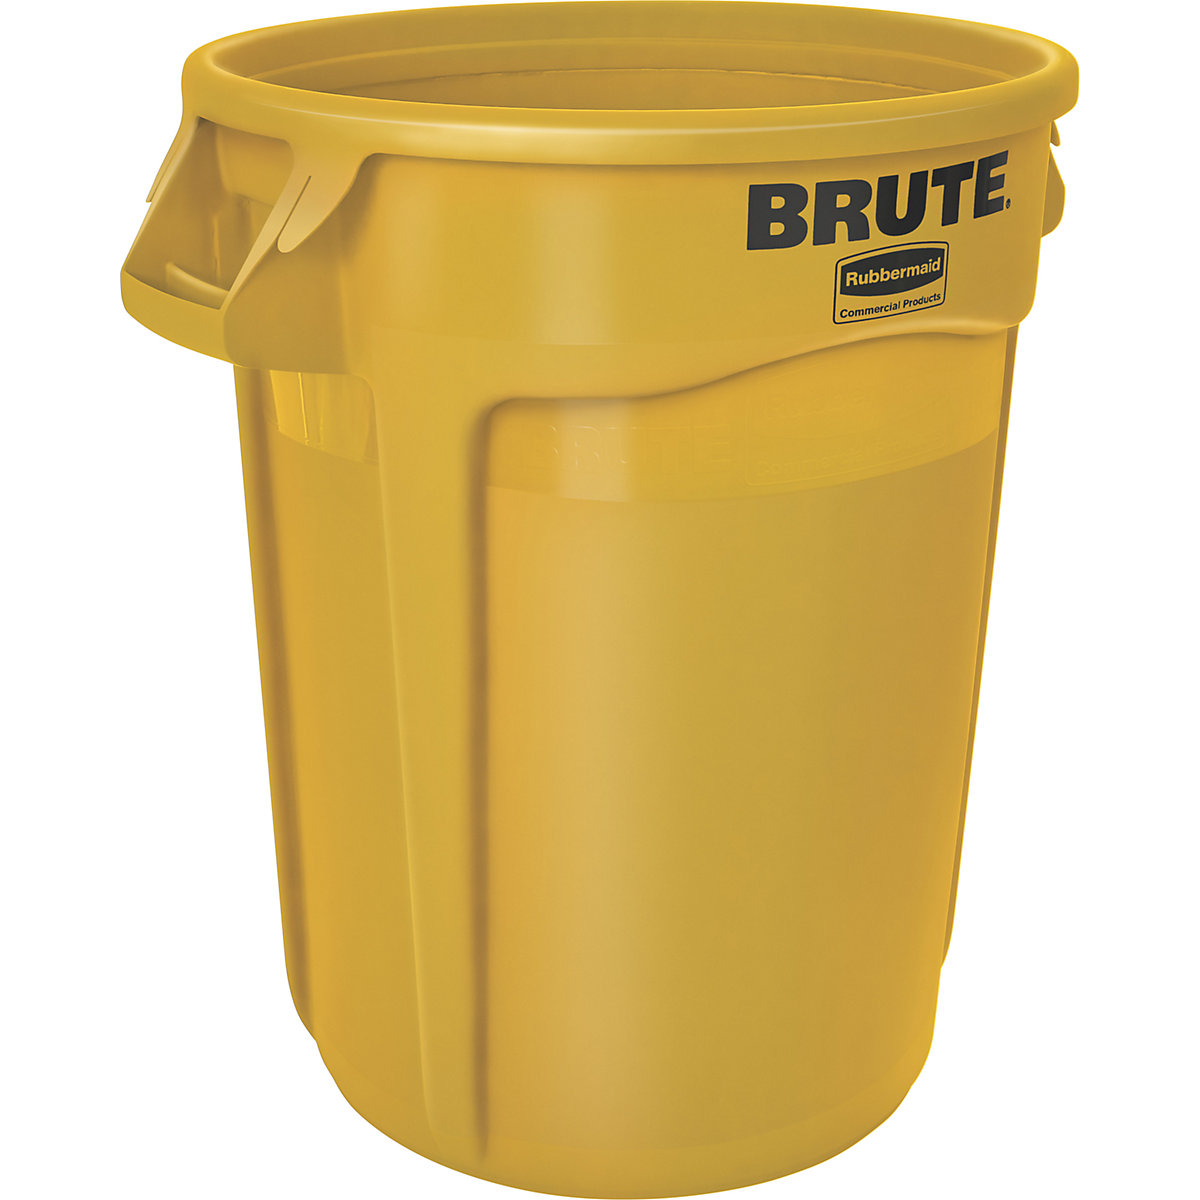 Univerzalni kontejner BRUTE®, okrugli – Rubbermaid, sadržaj 121 l, u žutoj boji-12